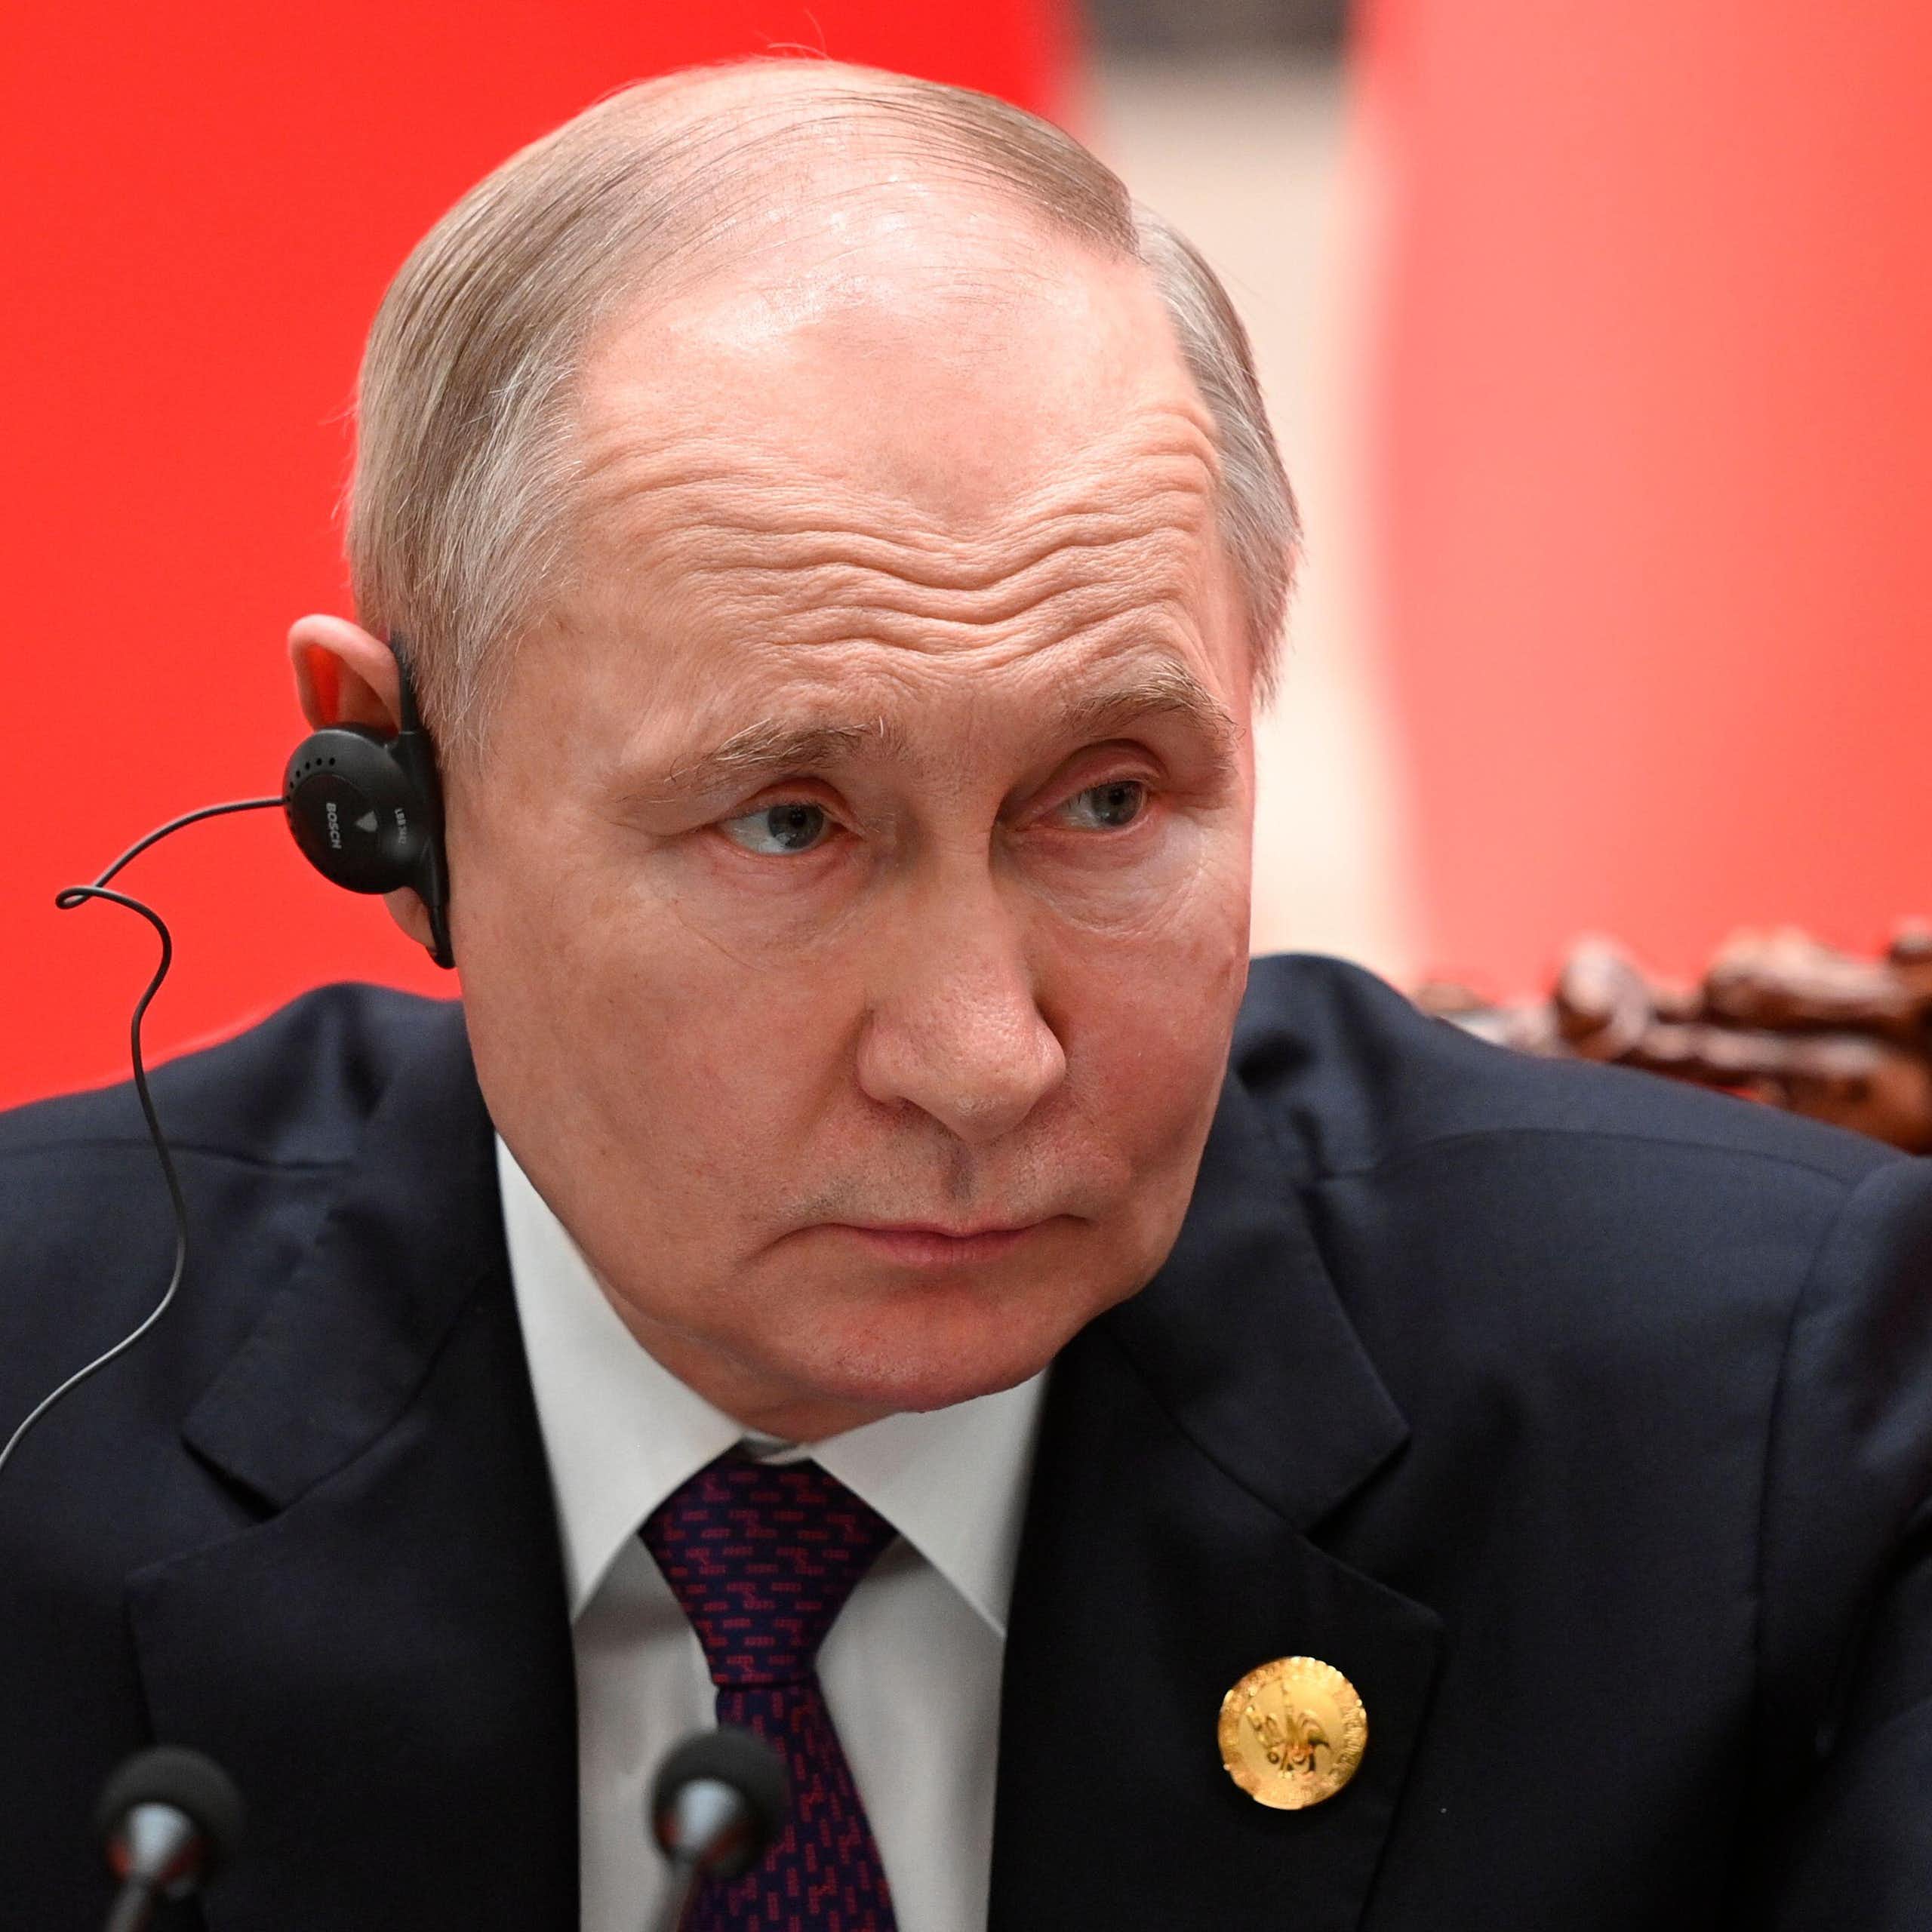 Vladimir Puttin with a headphone on.